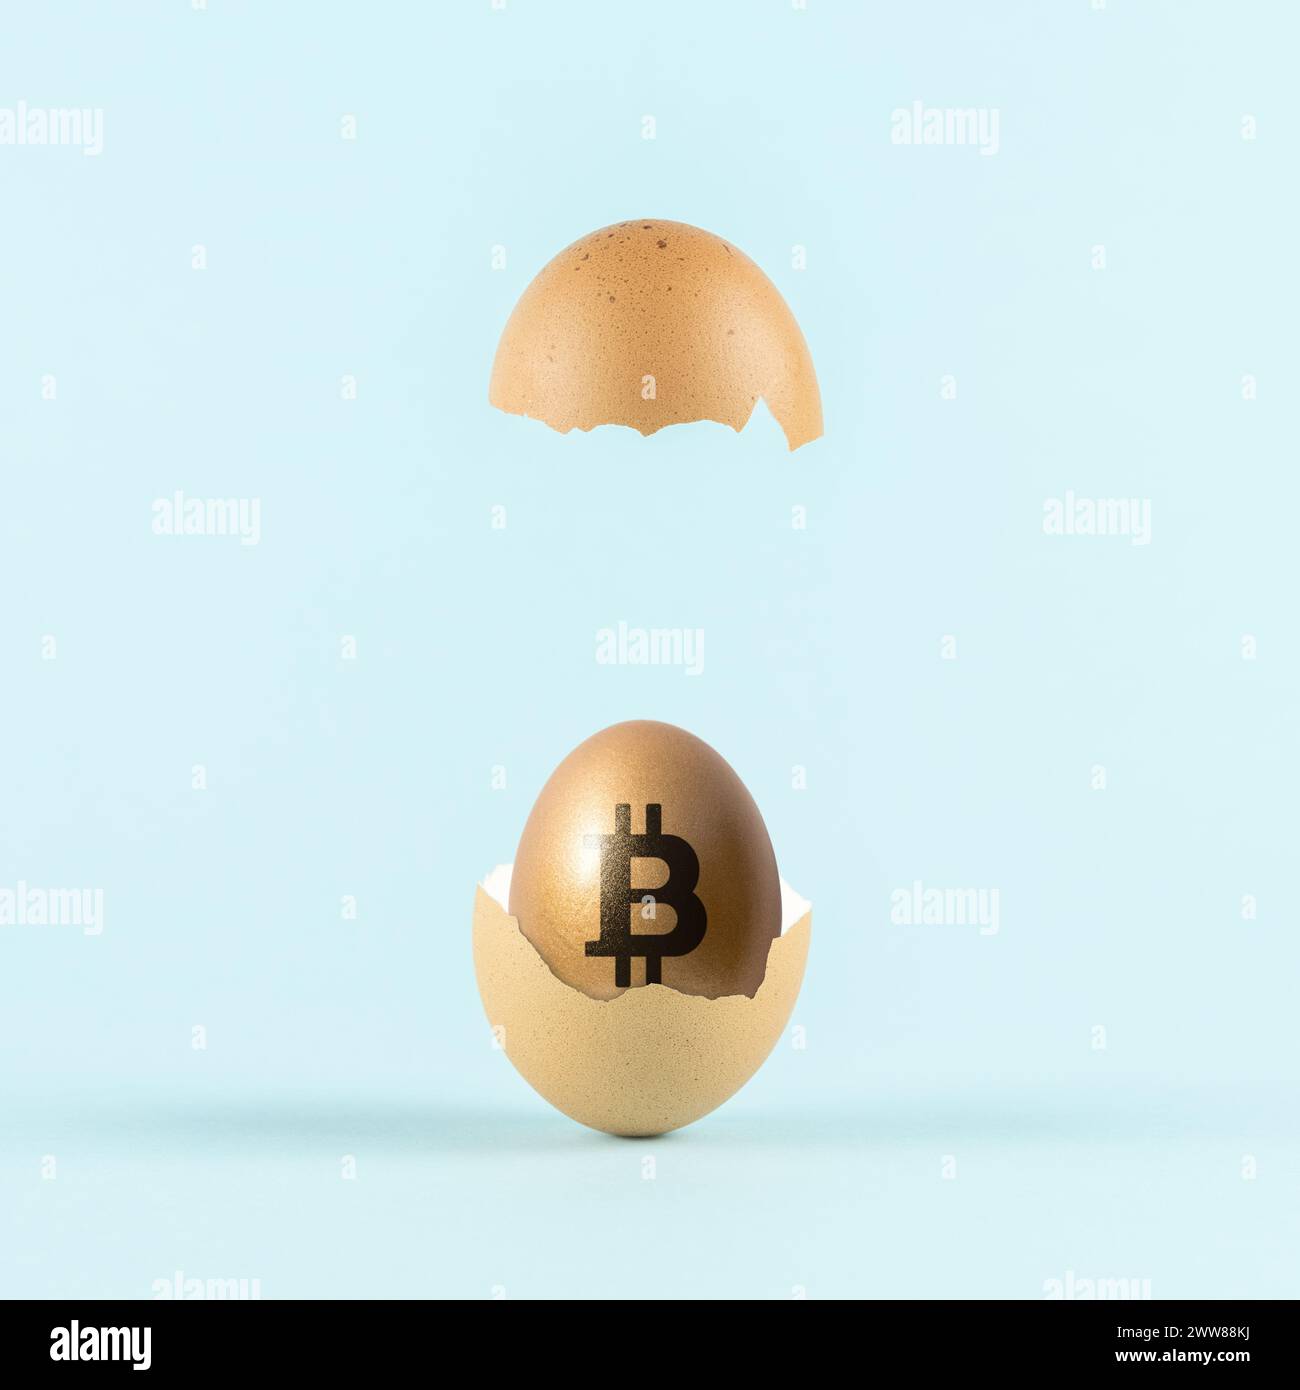 Huevo de oro con un signo de bitcoin en cáscara de huevo agrietada contra fondo azul pastel. Concepto de inversión mínima. Foto de stock